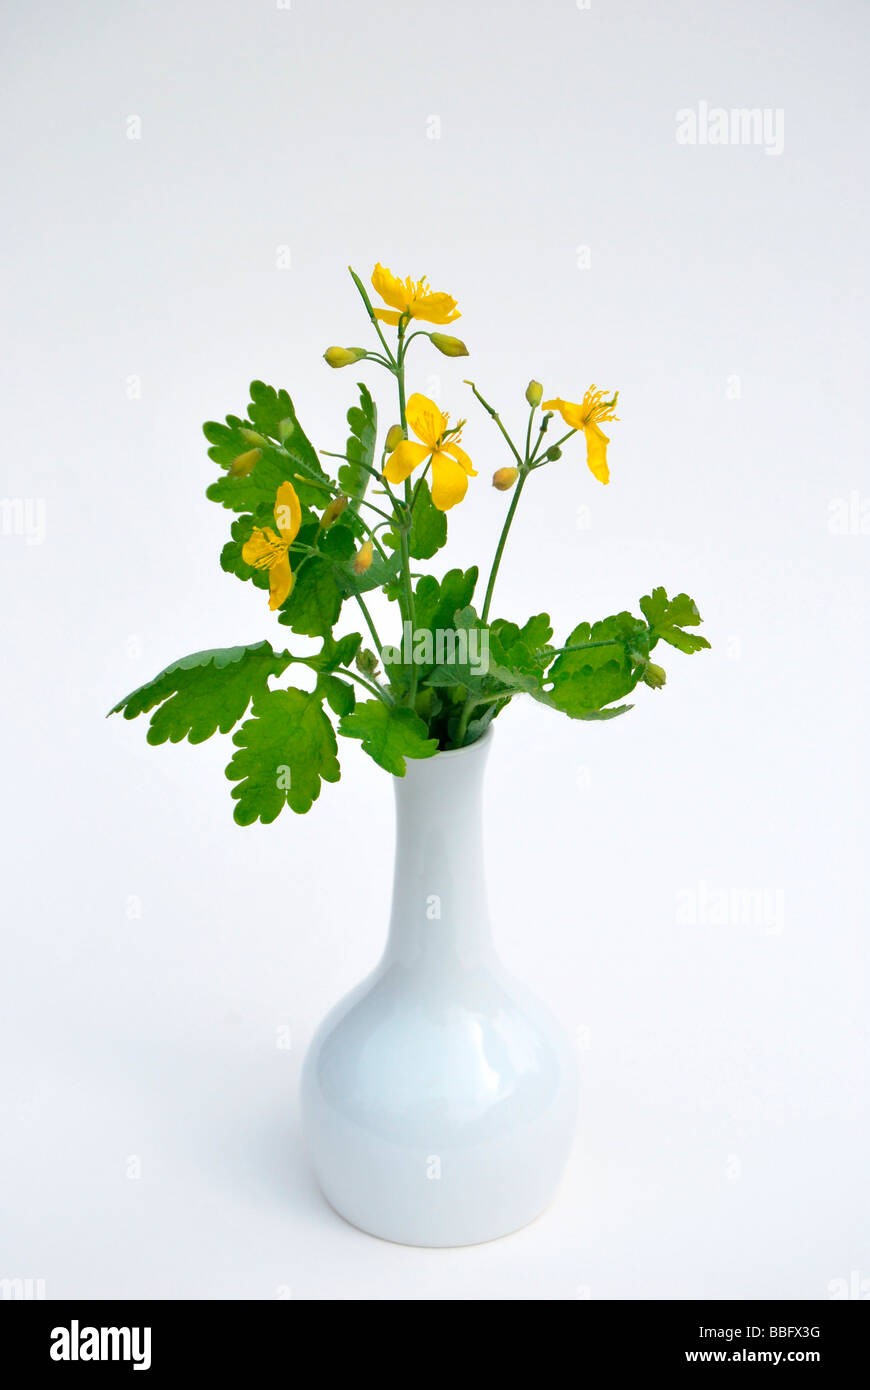 Greater Celandine or Tetterwort (Chelidonium majus), medicinal plant, poisonous plant in a vase Stock Photo